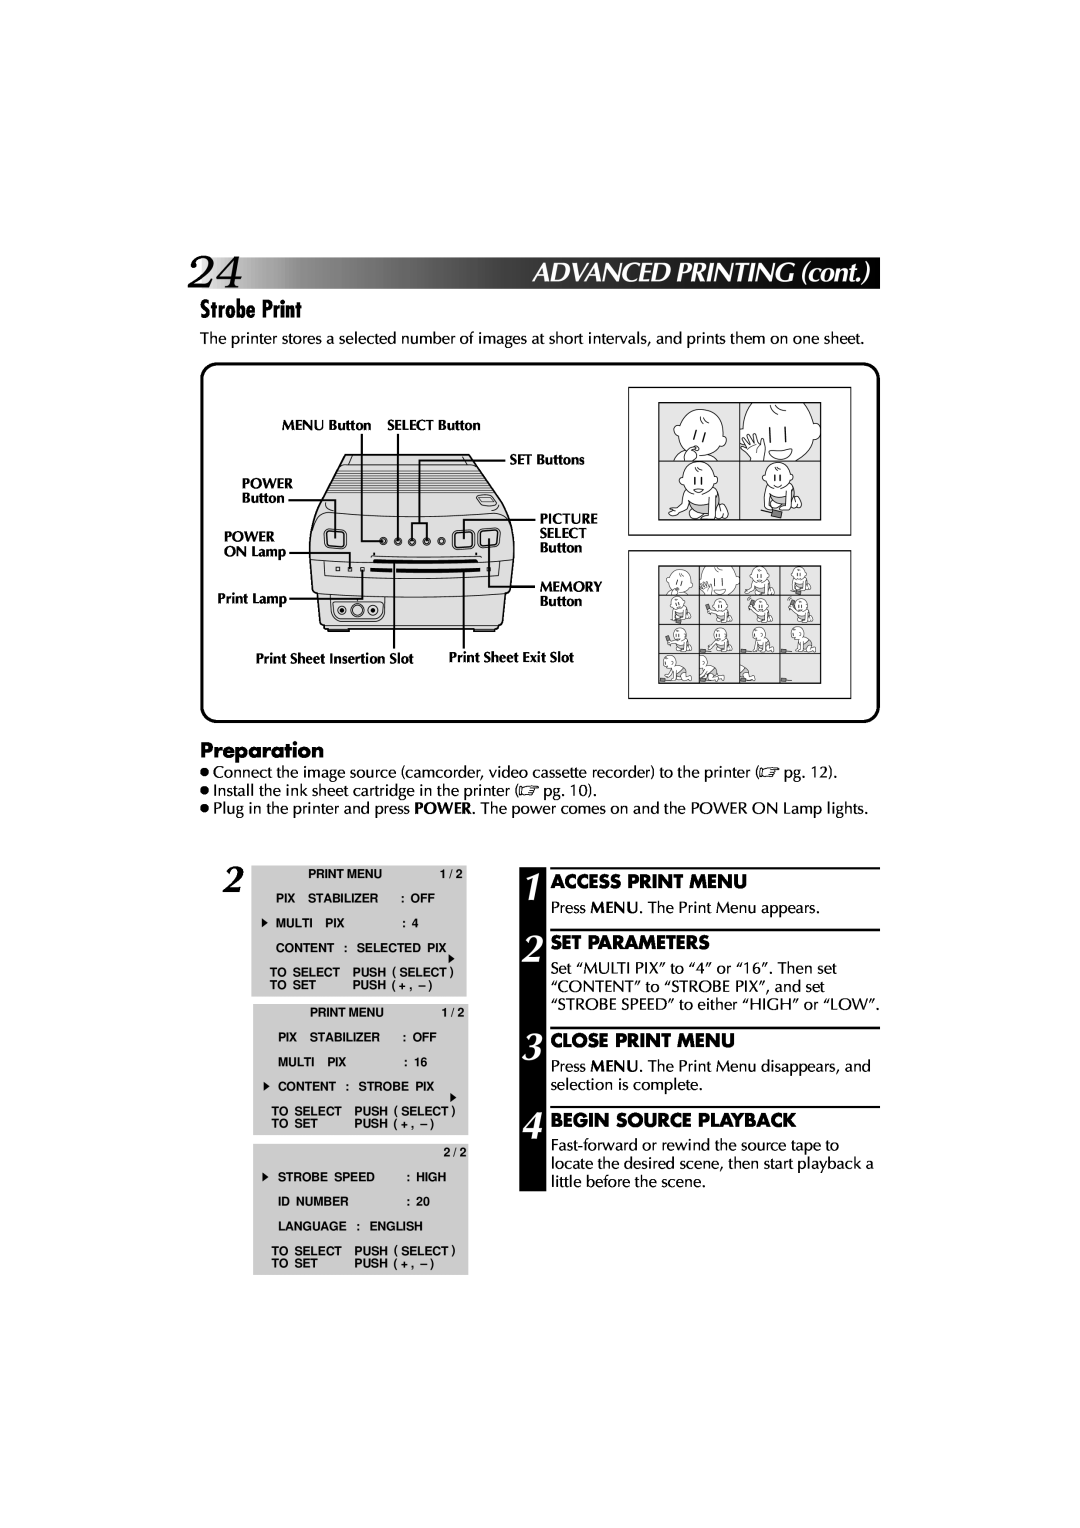 JVC GV-PT1 manual 24ADVANCEDPRINTINGcont, Strobe Print, Set Parameters, Preparation, Access Print Menu, Close Print Menu 